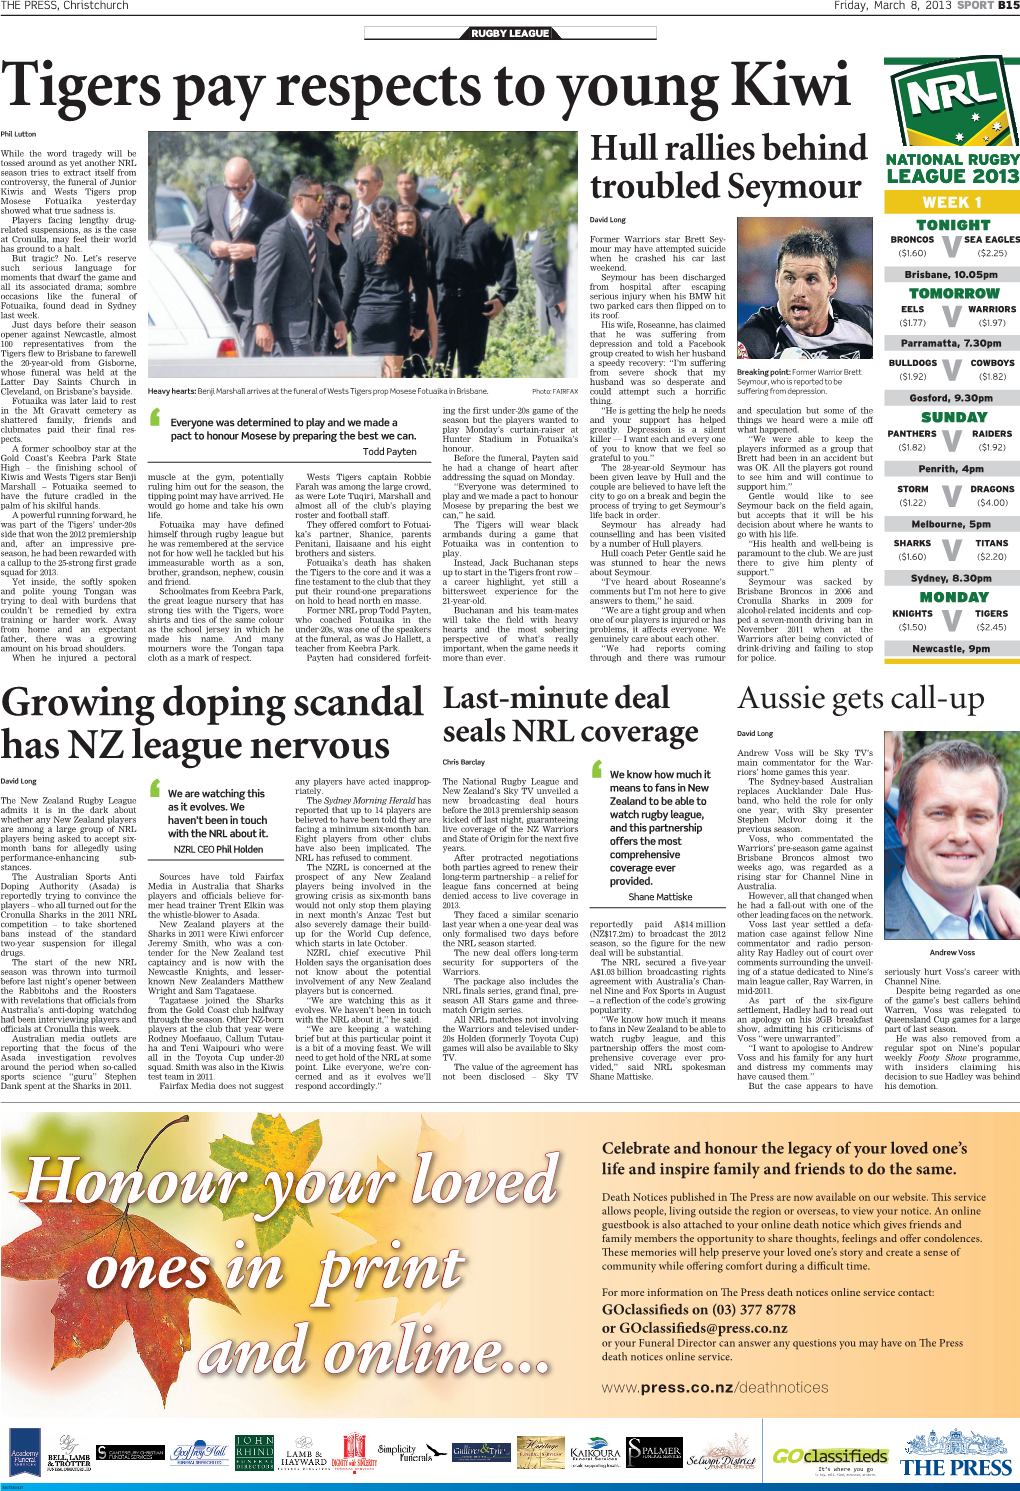 Growing Doping Scandal Has NZ League Nervous